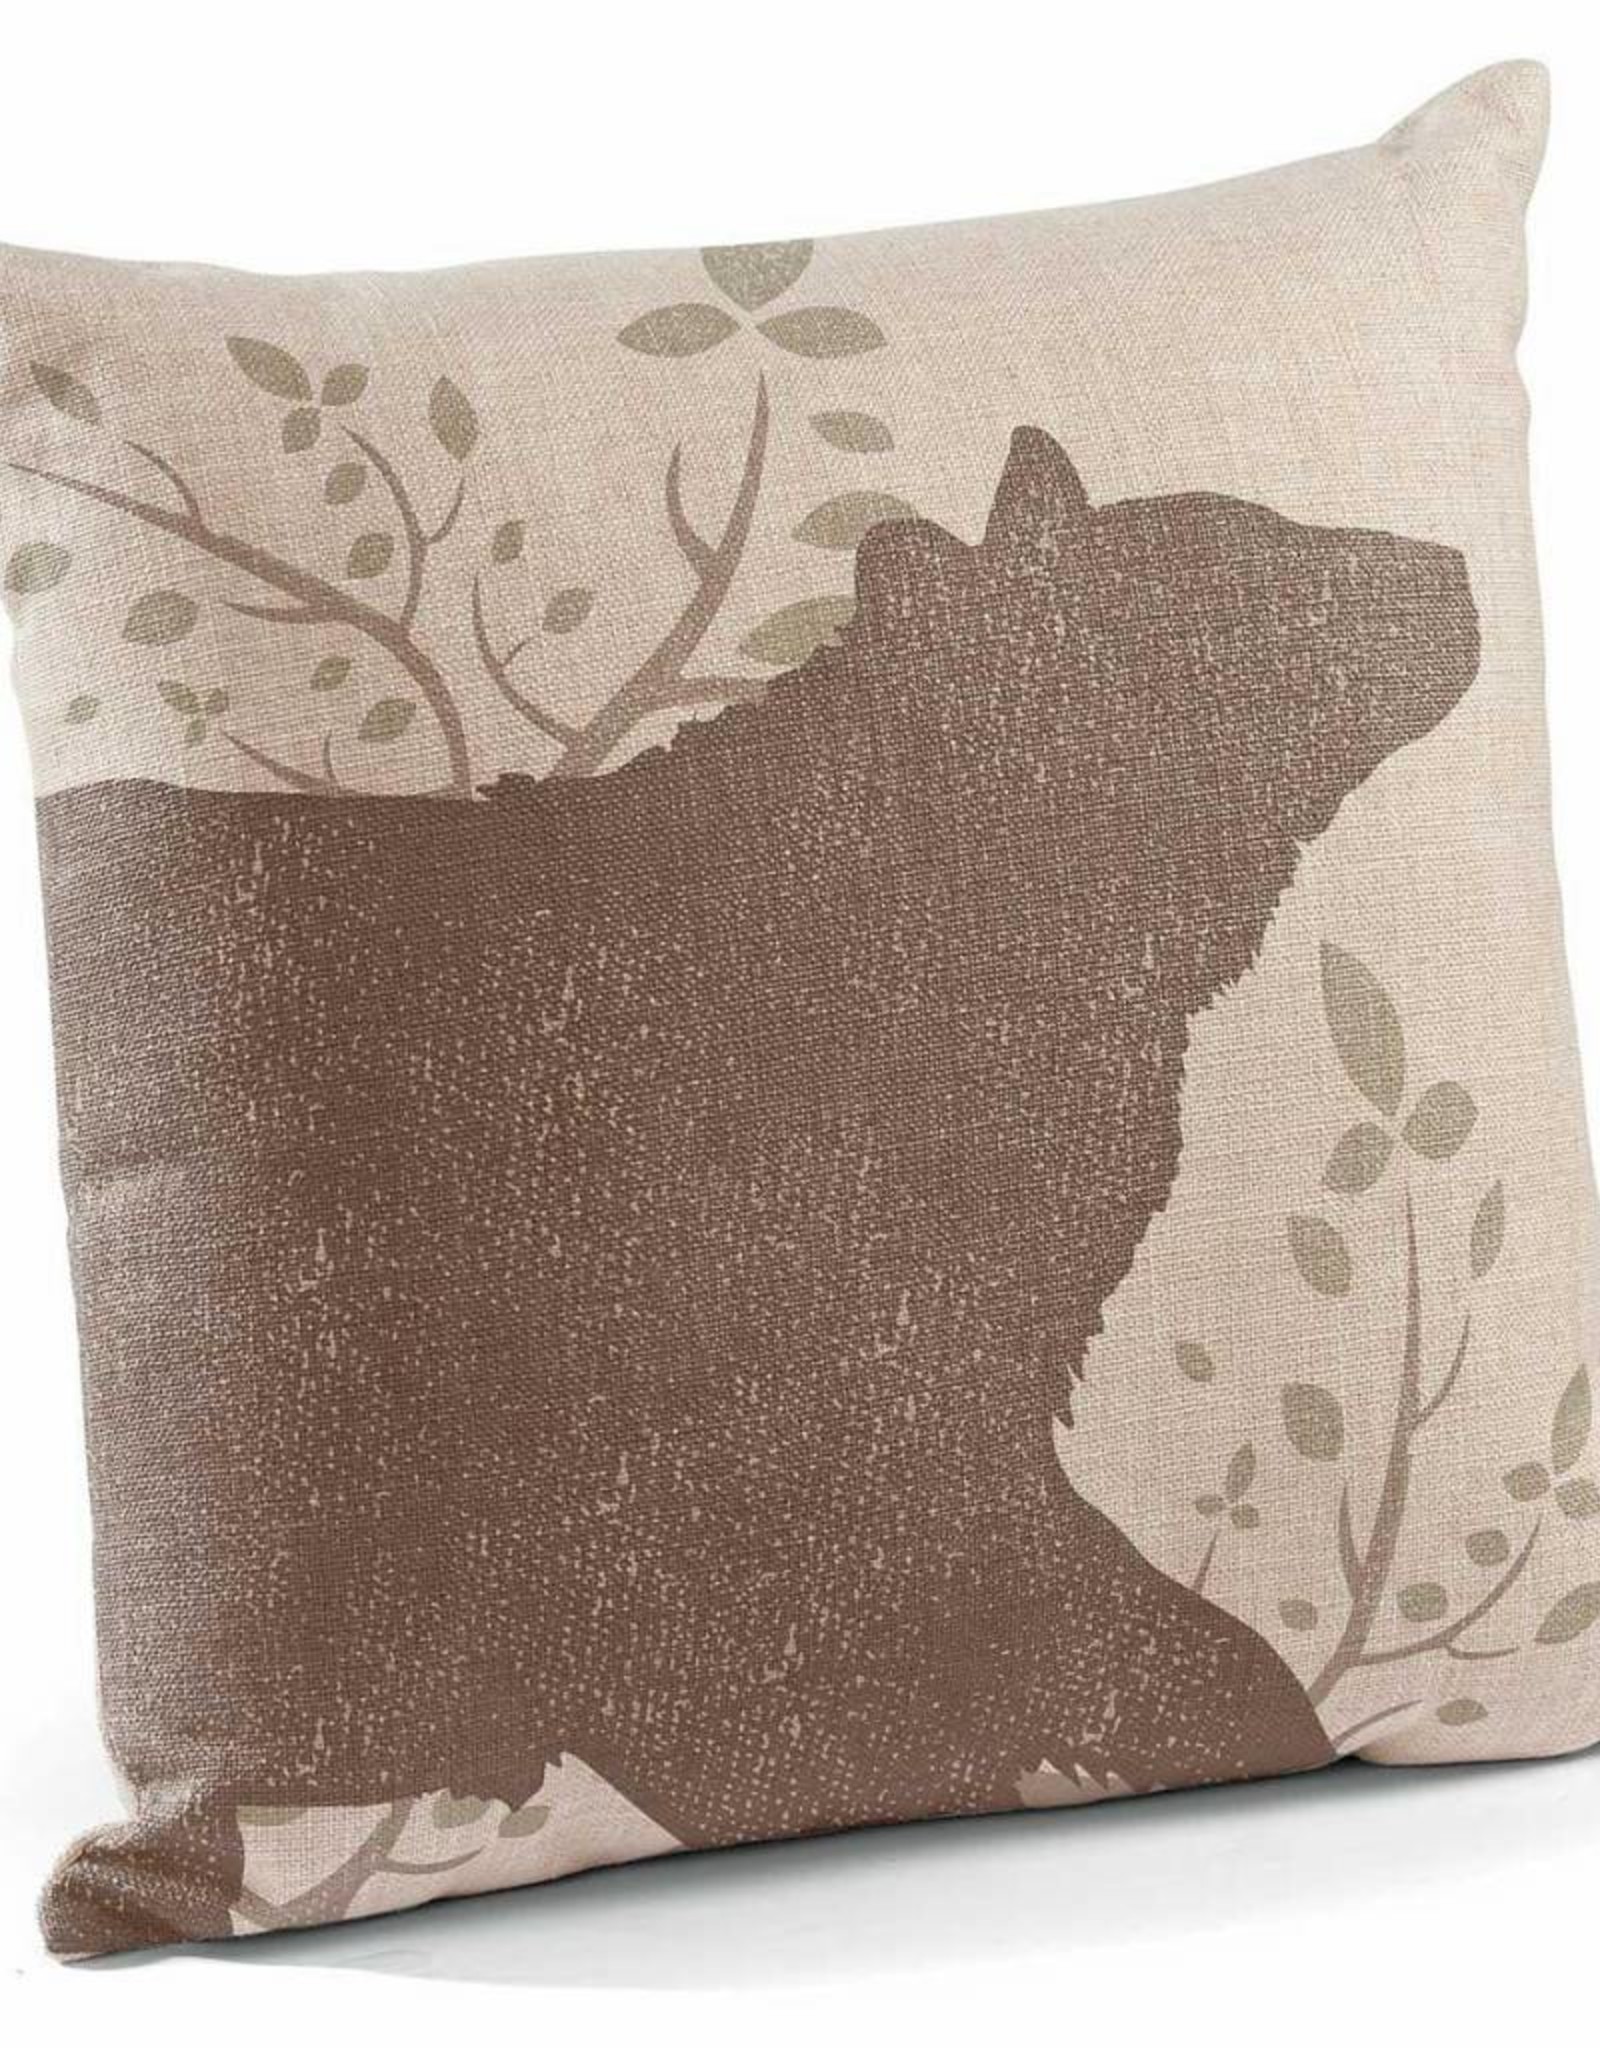 Decorative Pillow - Black Bear